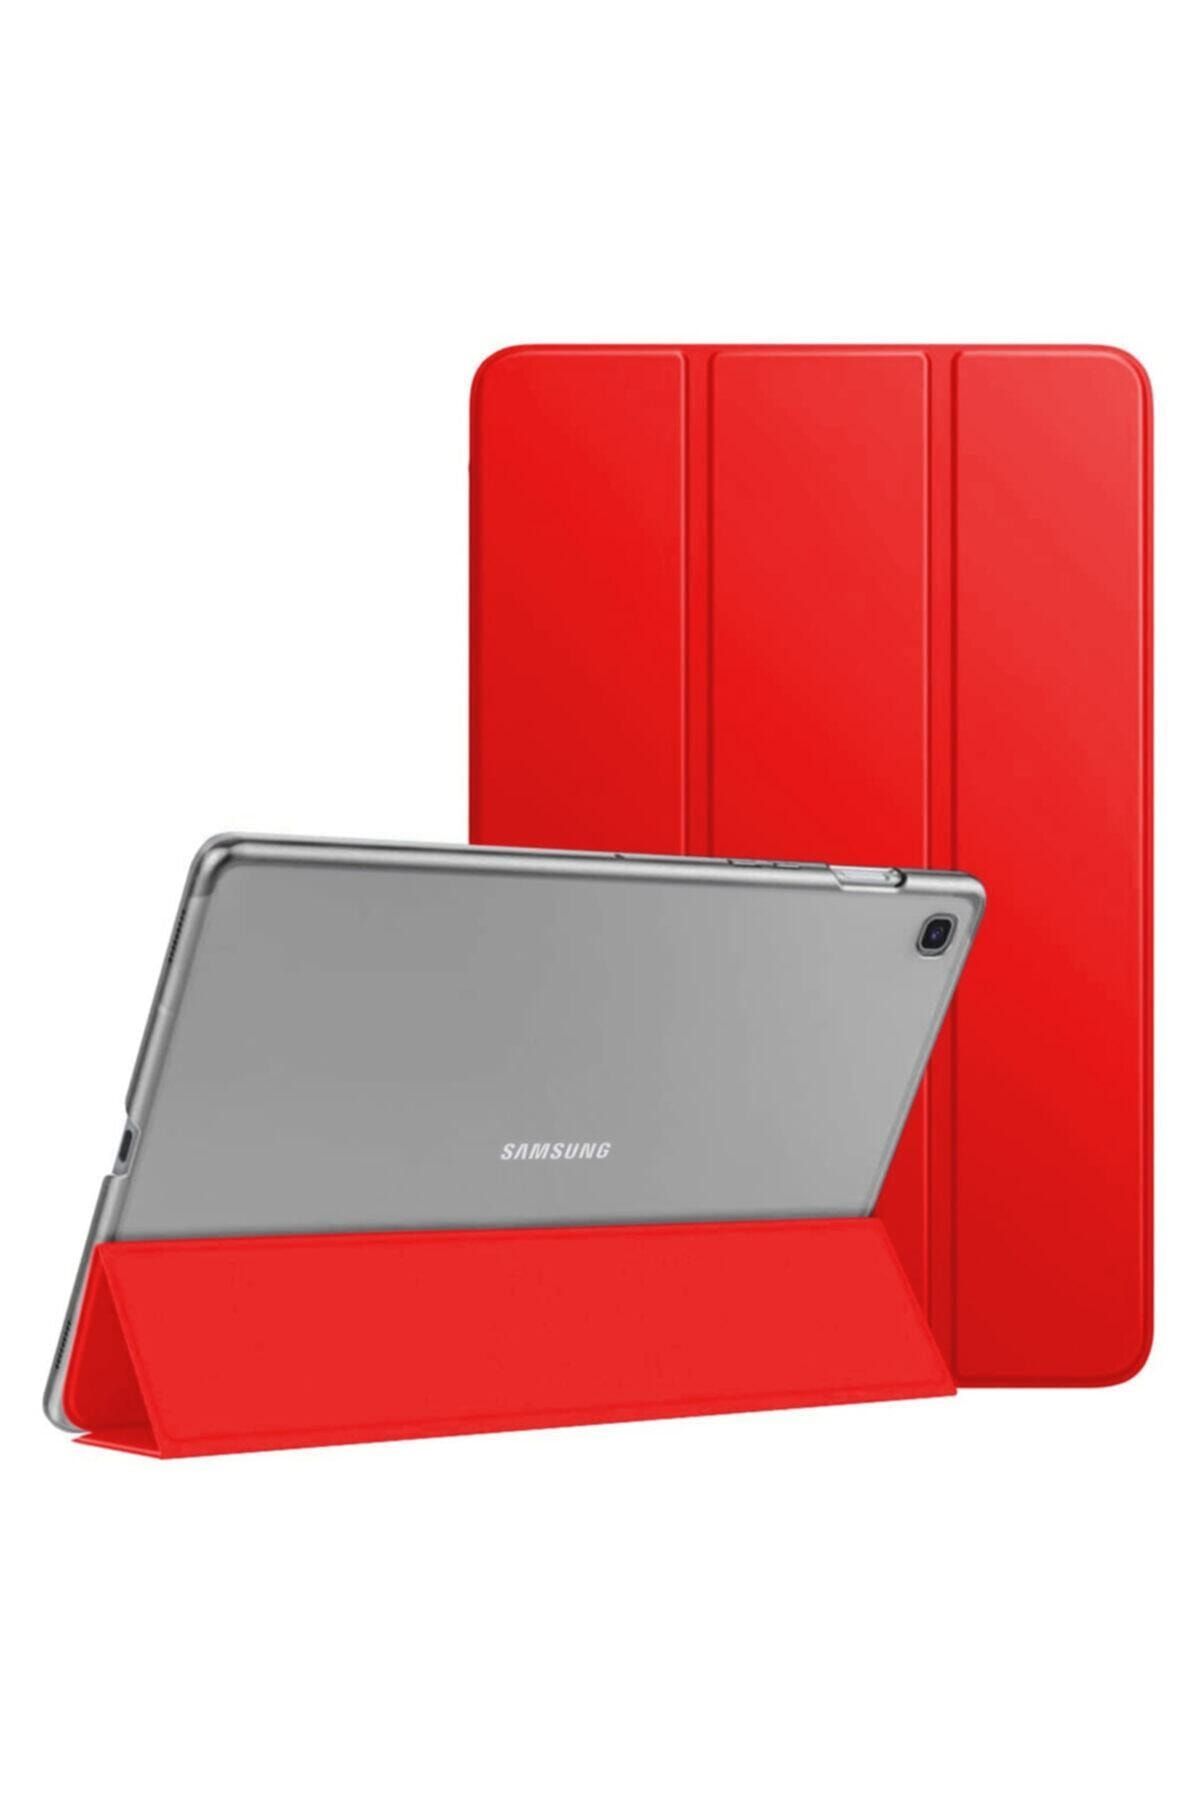 Teknoloji Gelsin Galaxy Tab A7 T500 Kılıf Slim Akıllı Saydam Kapaklı Translucent Back Smart Cover Kılıfı Kırmızı